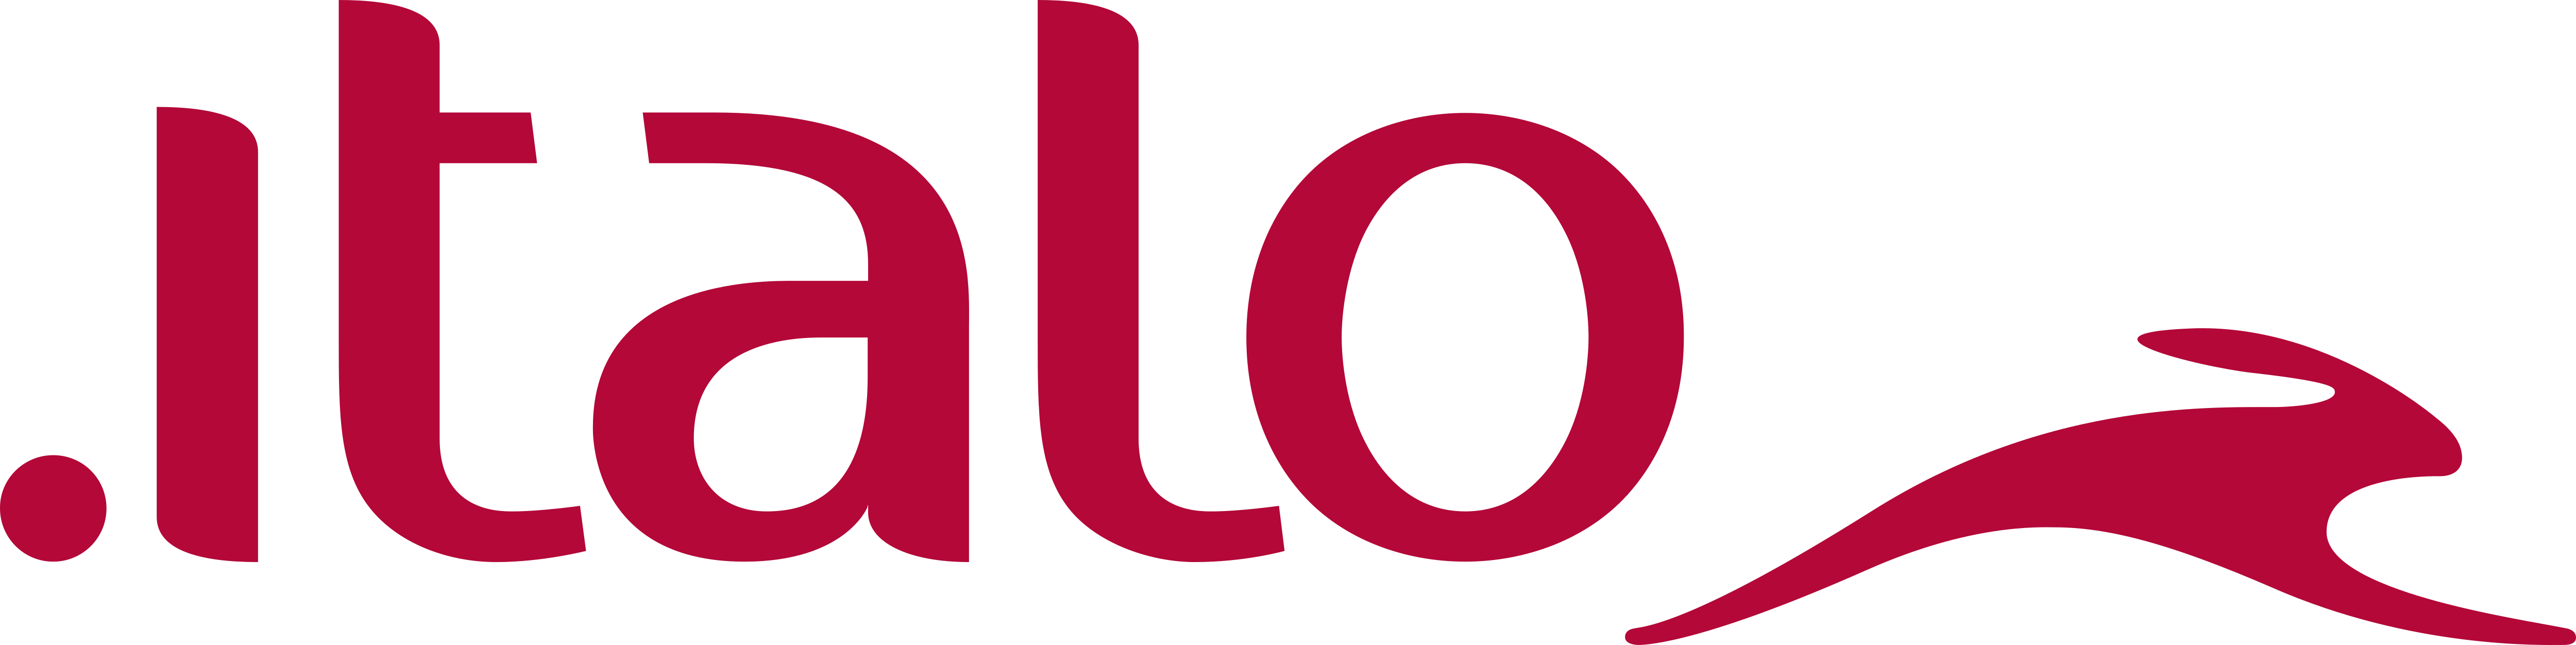 Italo Treno – Logos Download